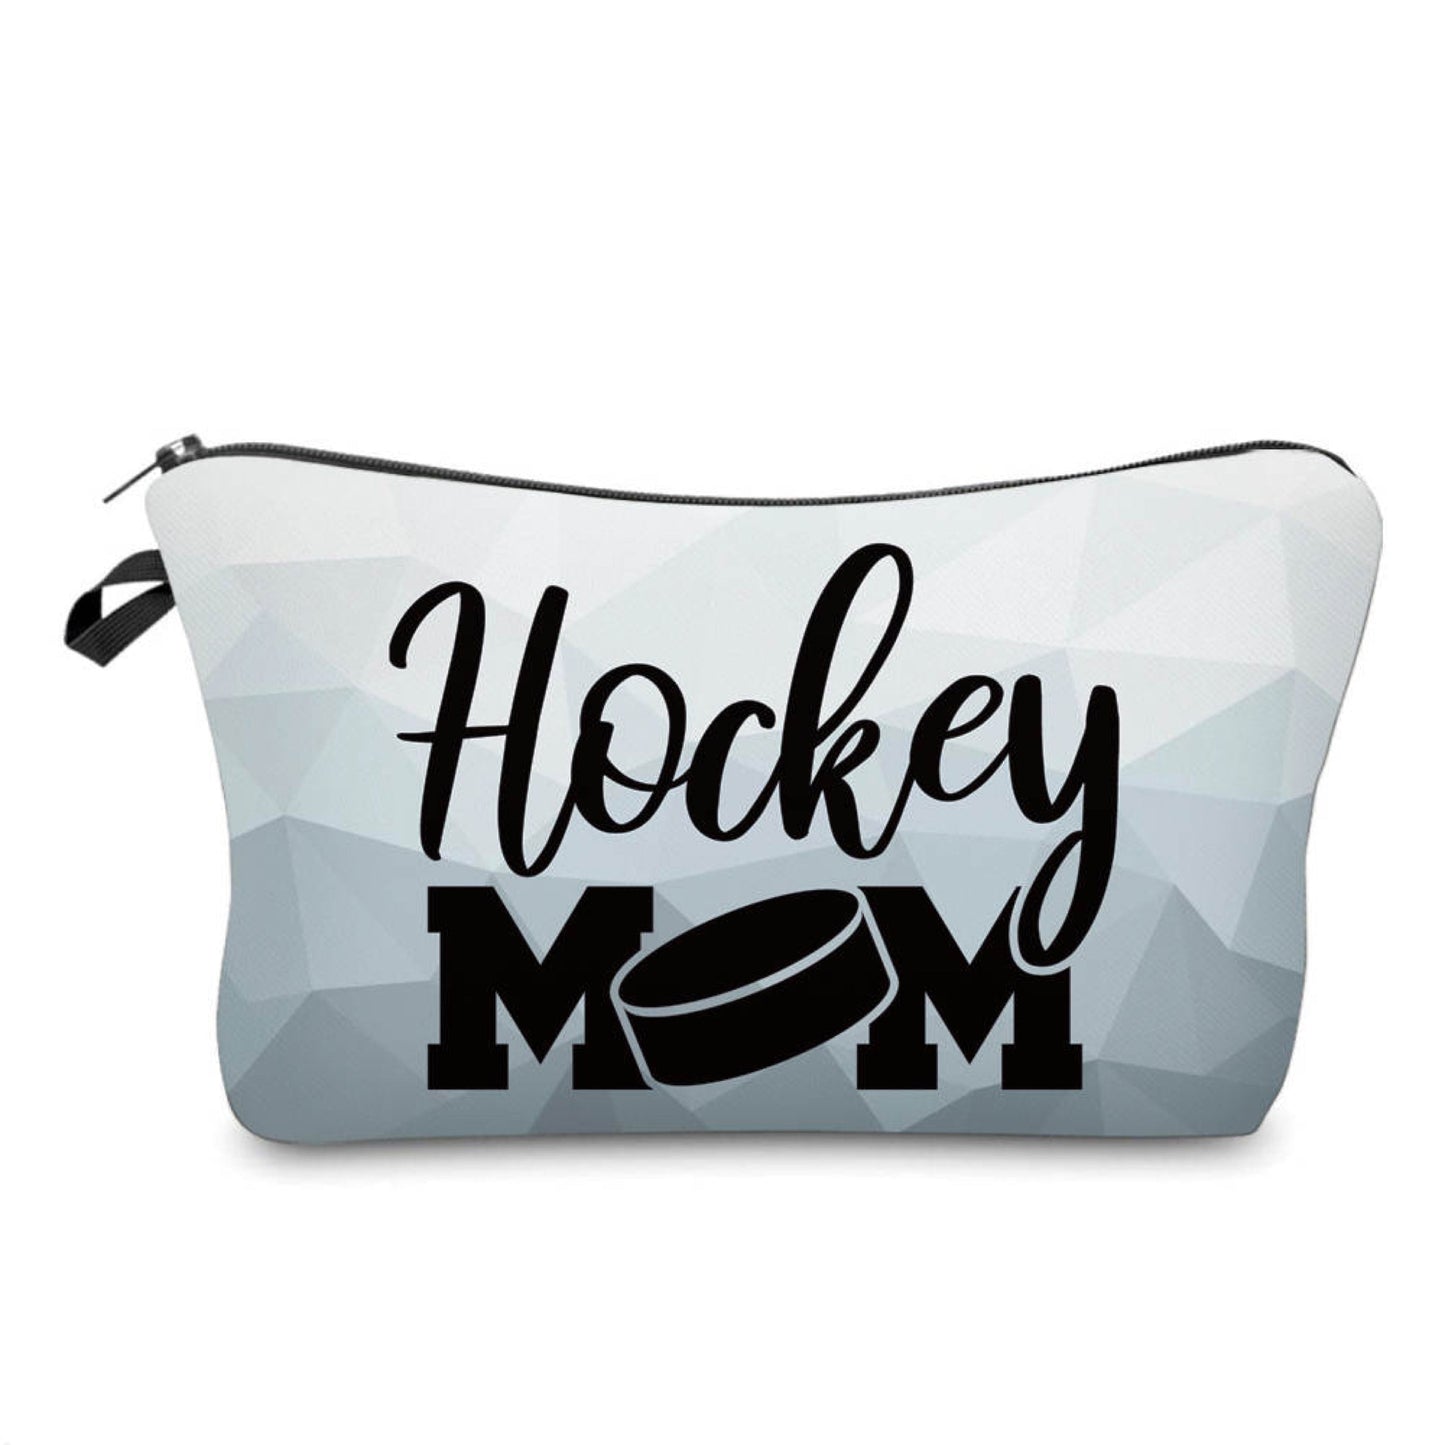 Pouch - Hockey Mom